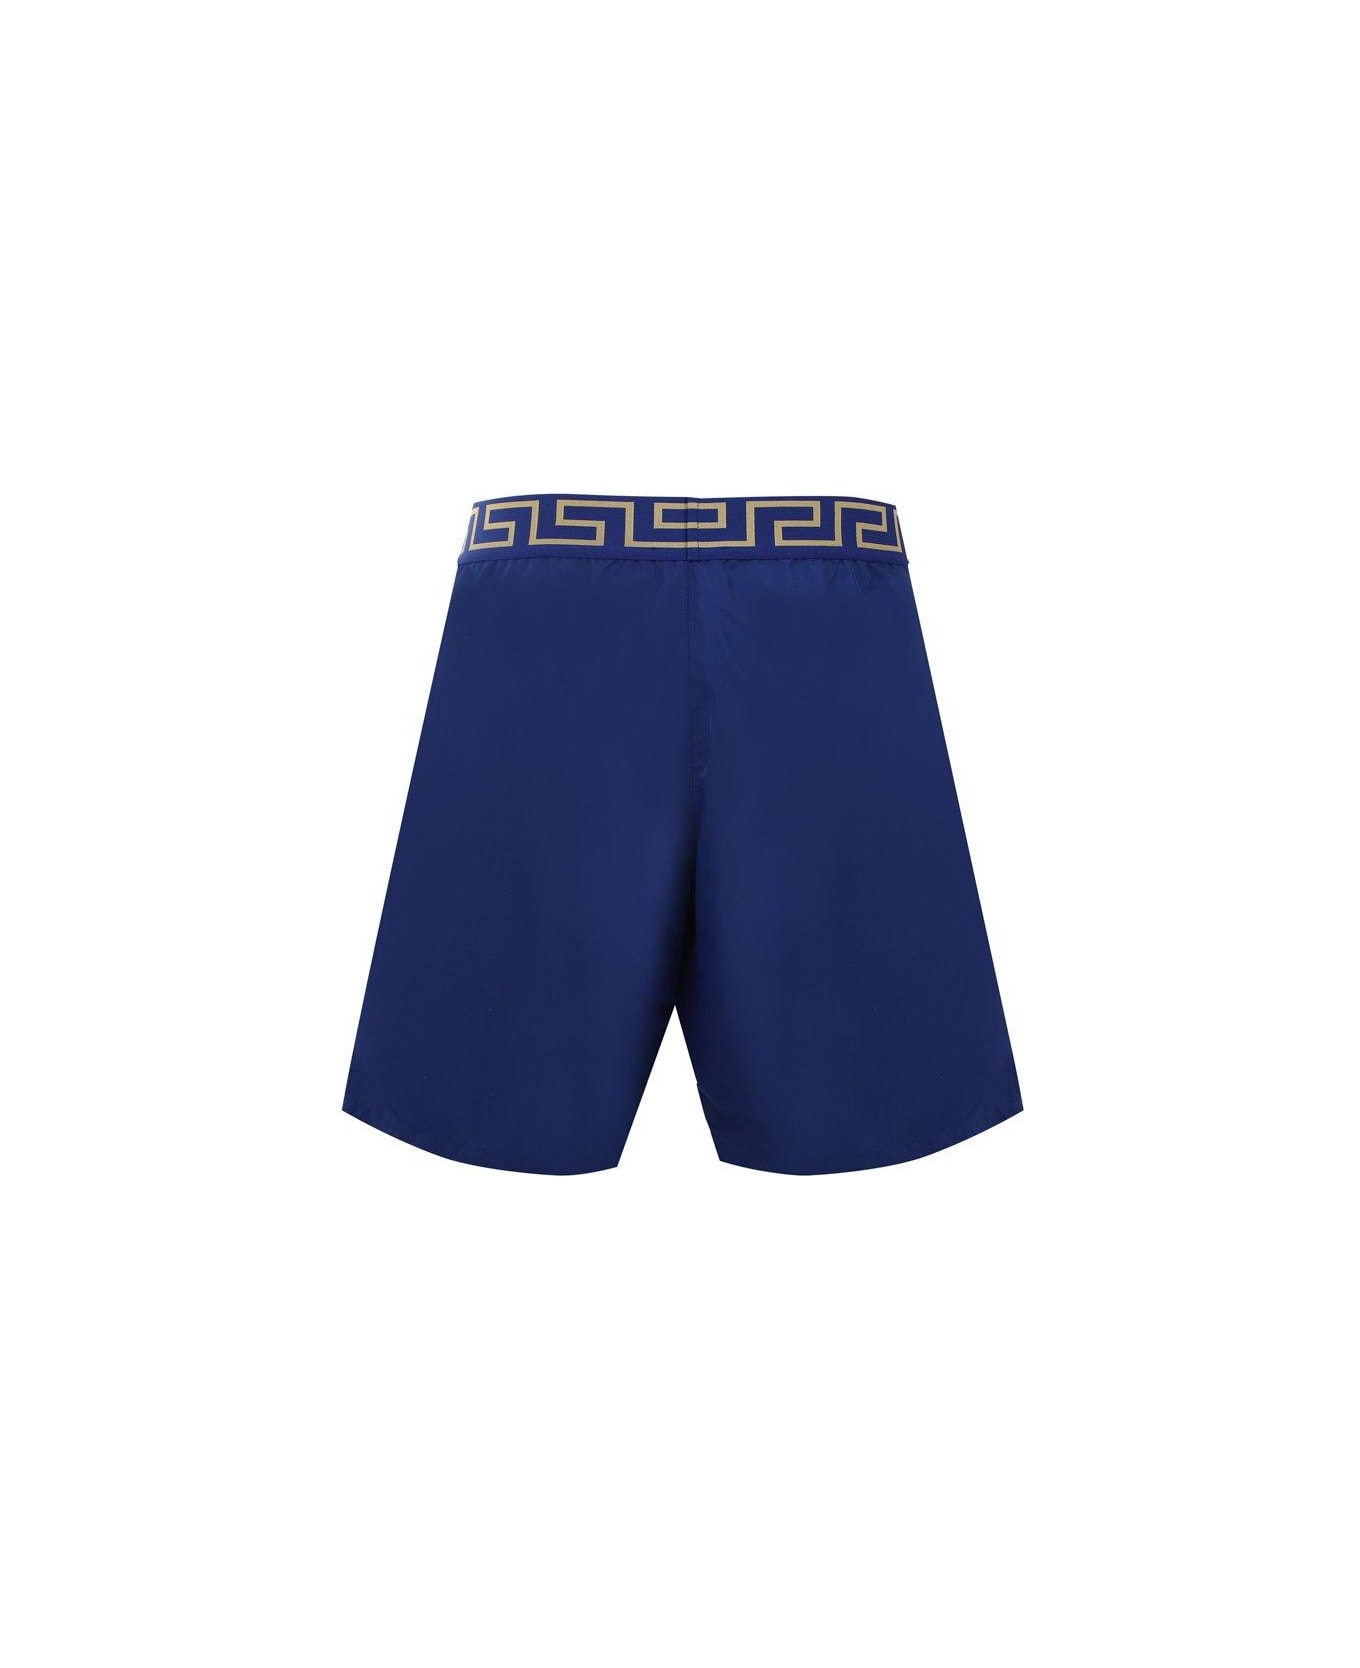 Versace Greca Waistband Swim Shorts - ROYAL BLUE